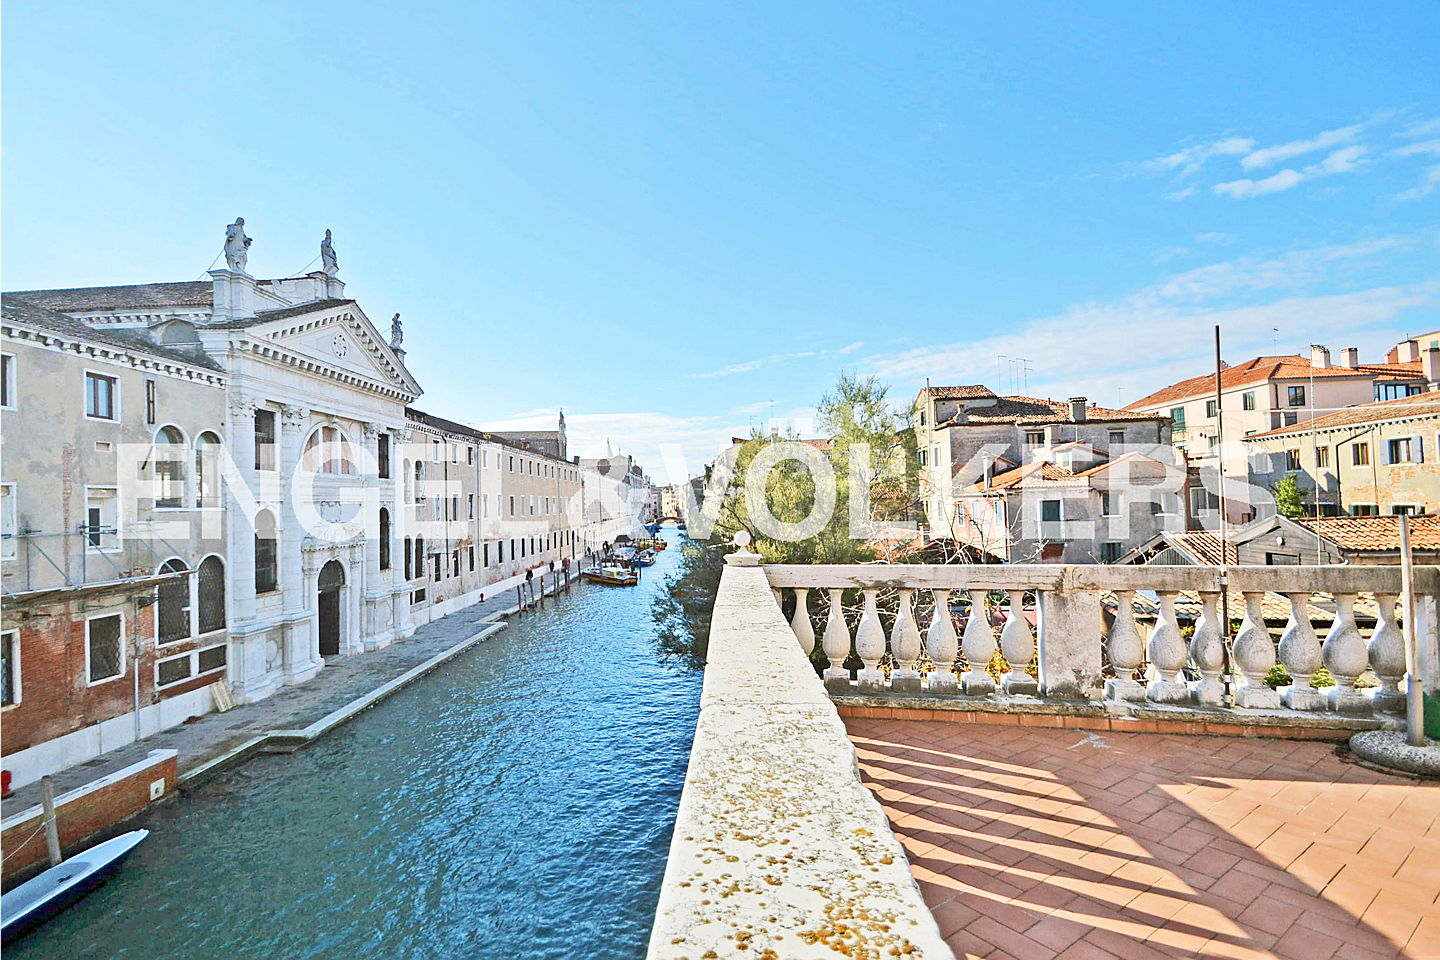  Venice
- 8.jpg